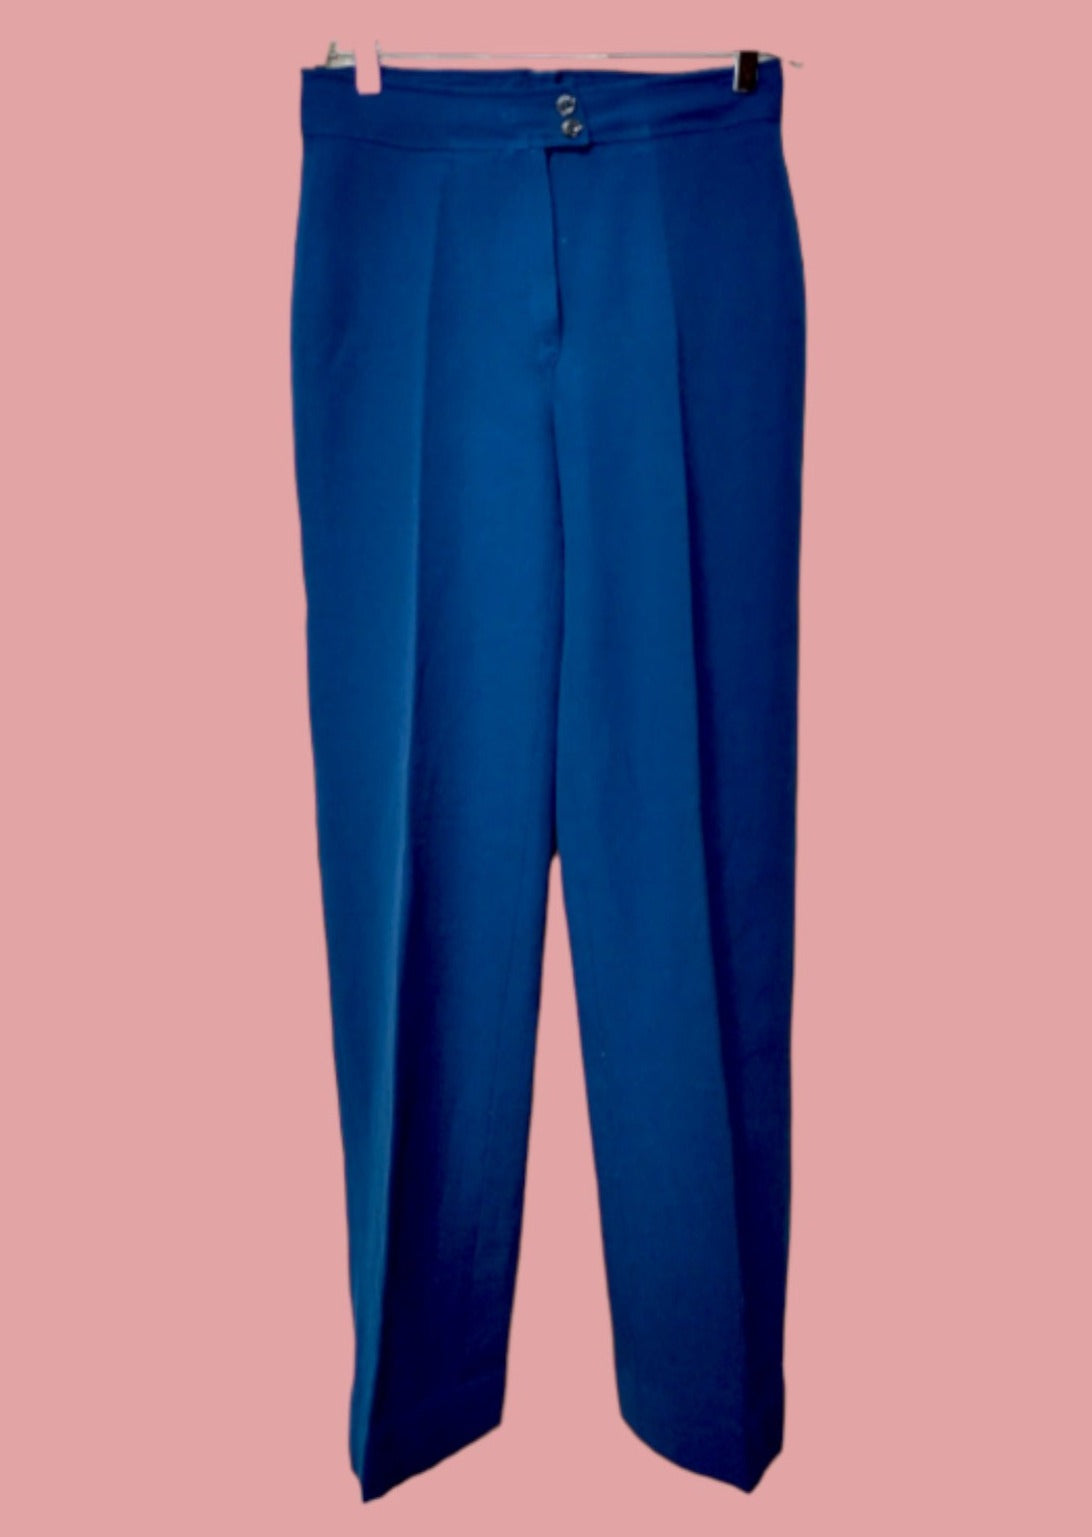 70' s, Vintage Μάλλινο Γυναικείο Παντελόνι σε Μπλε Indigo Χρώμα (Small)